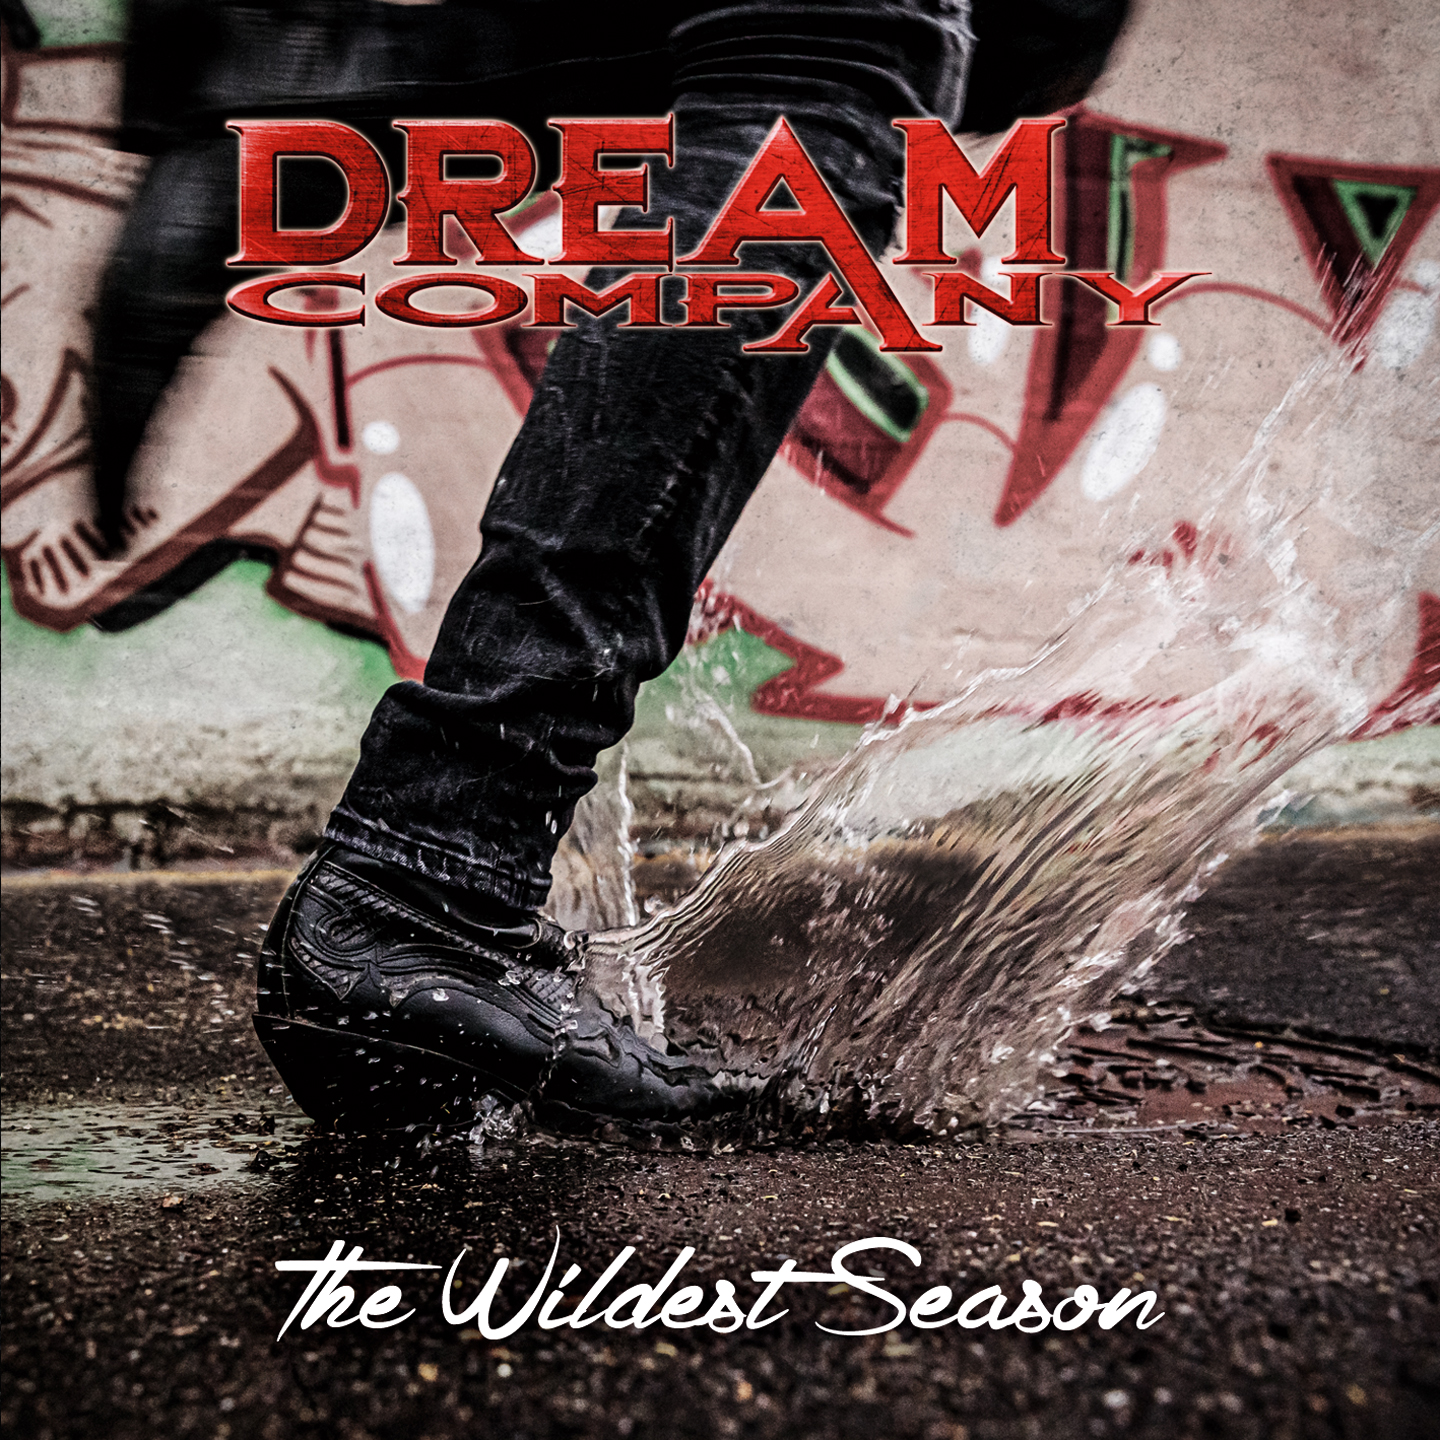 The-Wildest-Season-1440x1440.jpg